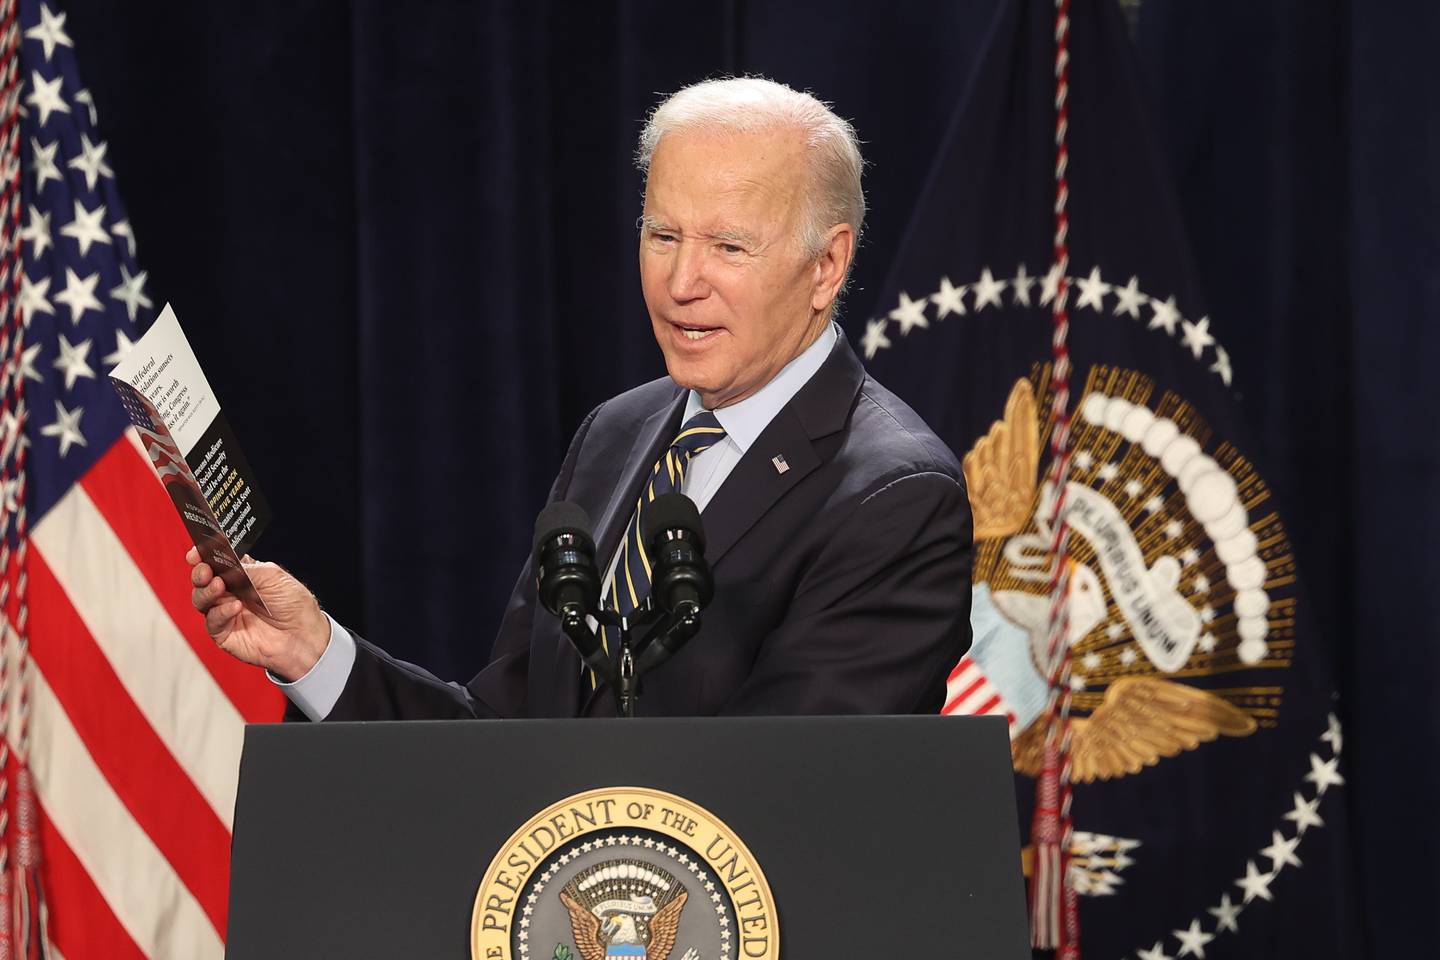 President Joe Biden speaks about Social Security and Medicare during a stop in Joliet at Jones Elementary School on Saturday.